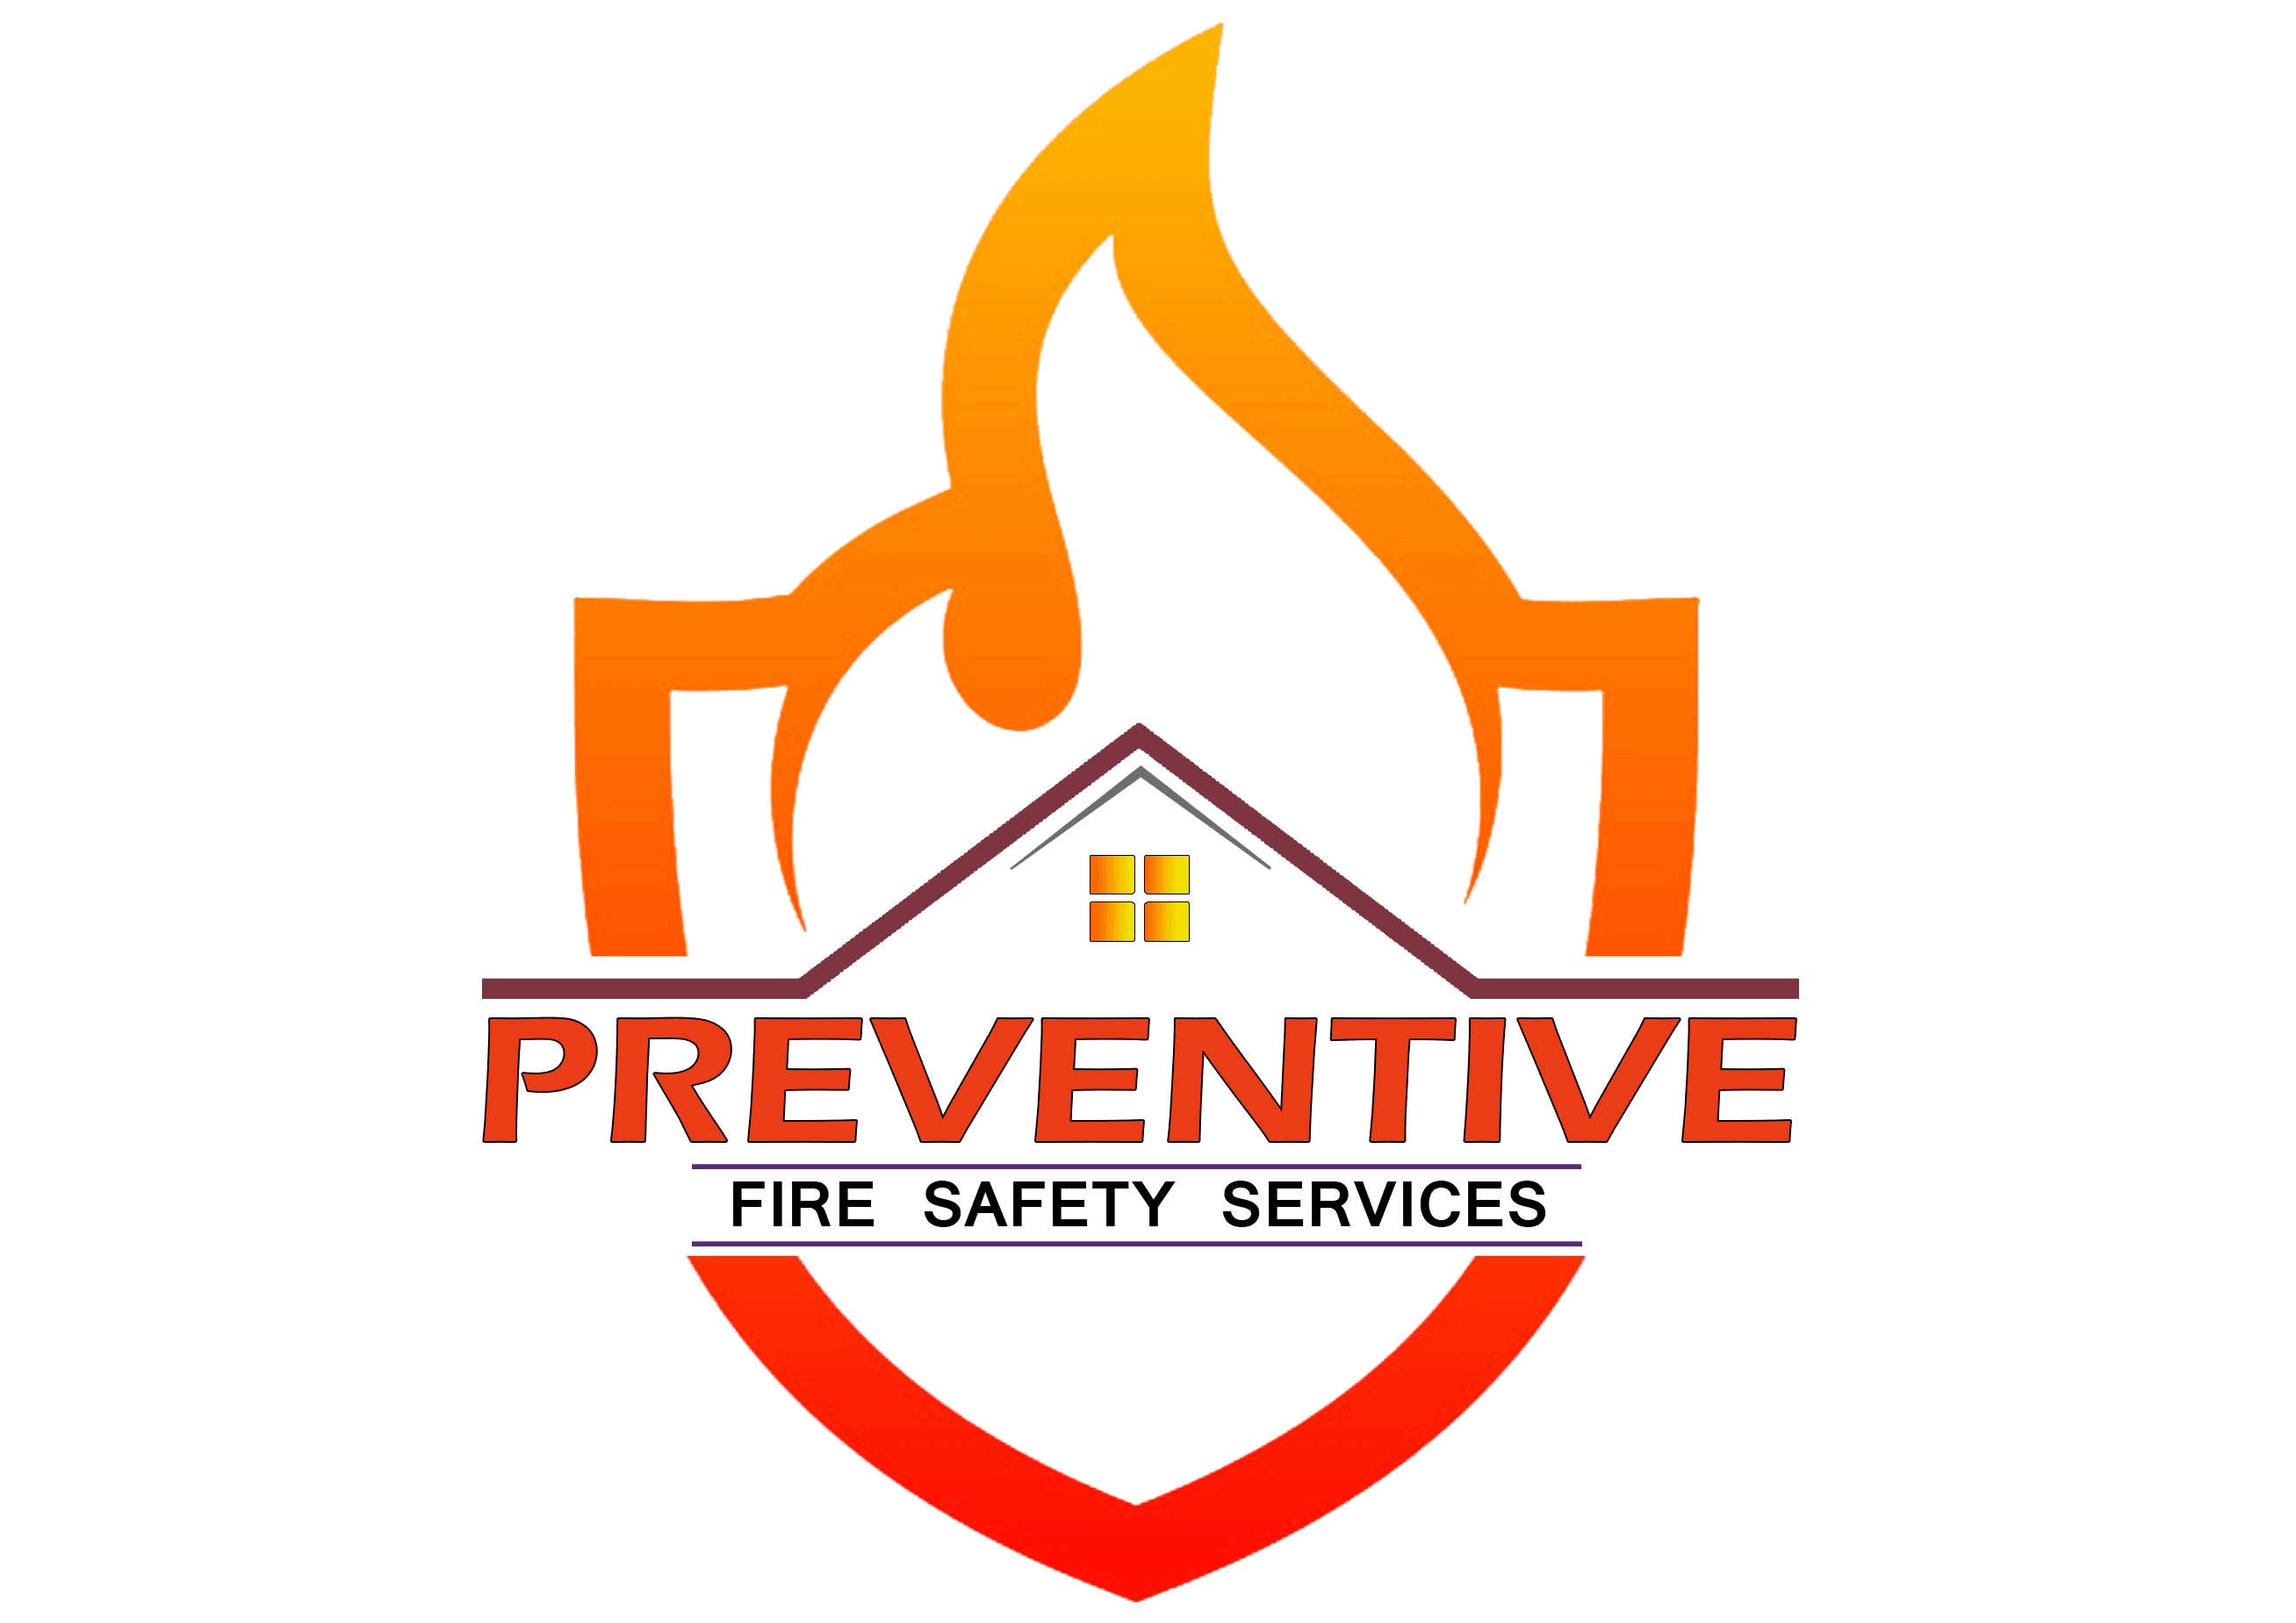 PREVENTIVE FIRE SAFETY SERVICES